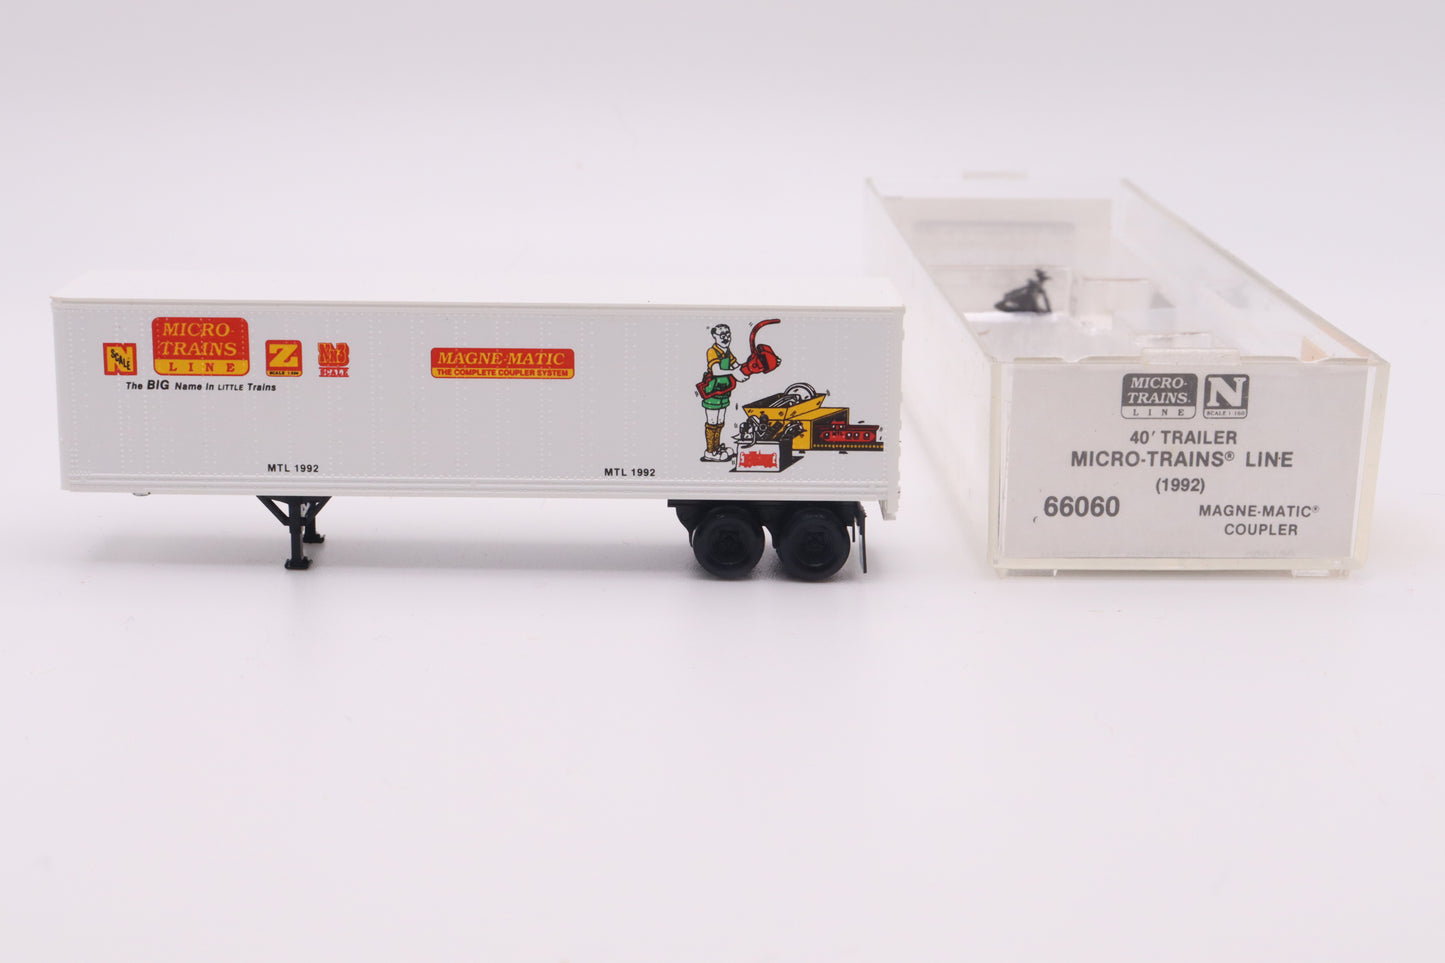 MTL-66060 - 40' Trailer - Micro-Trains Holiday Car - MTL-1992